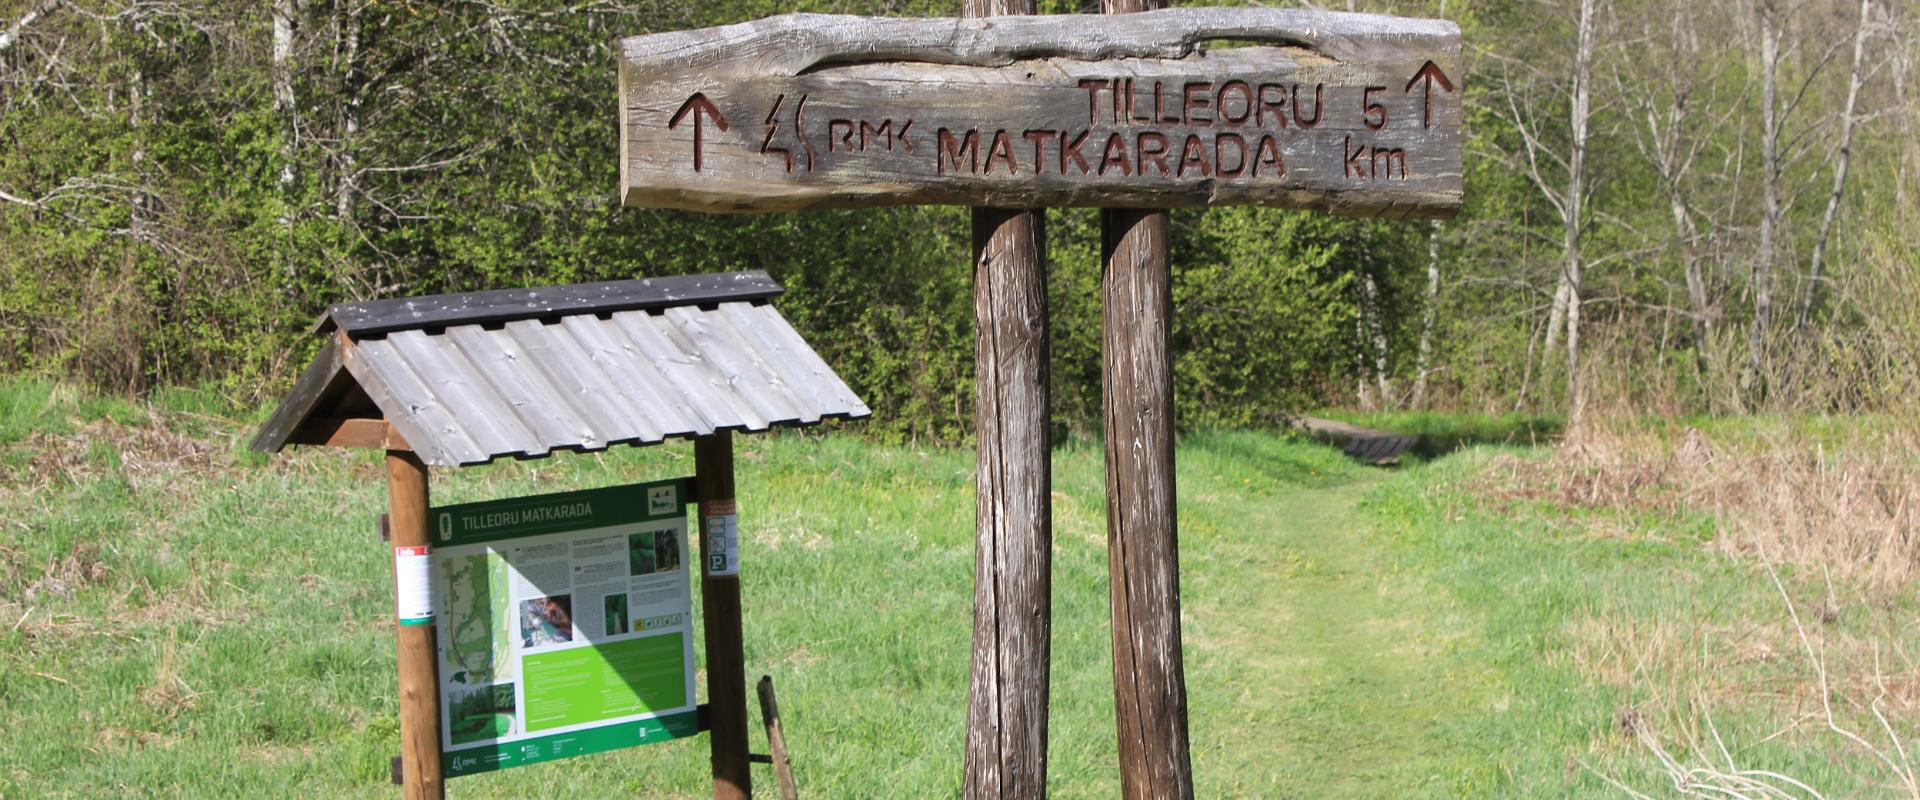 Tilleoru nature trail